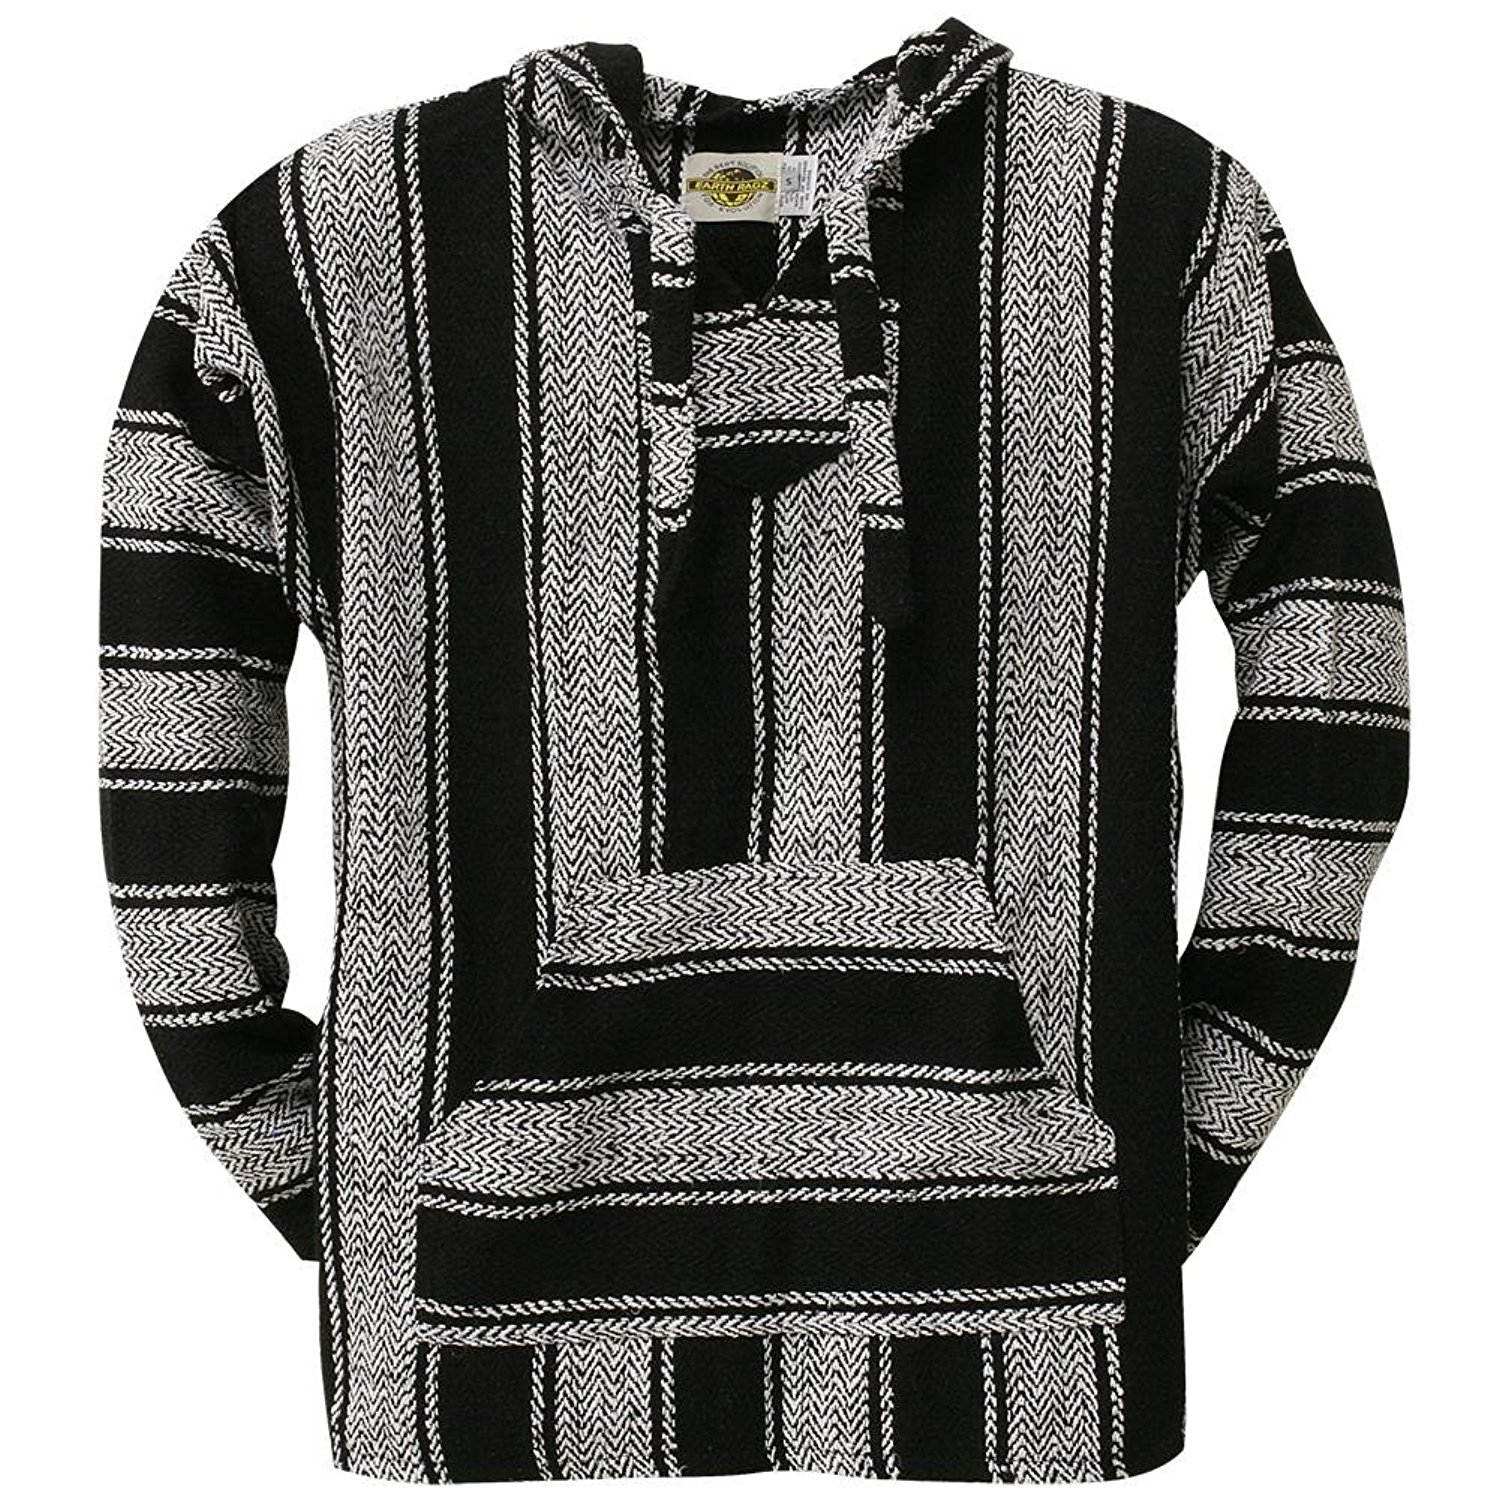 Weaved sweater photo